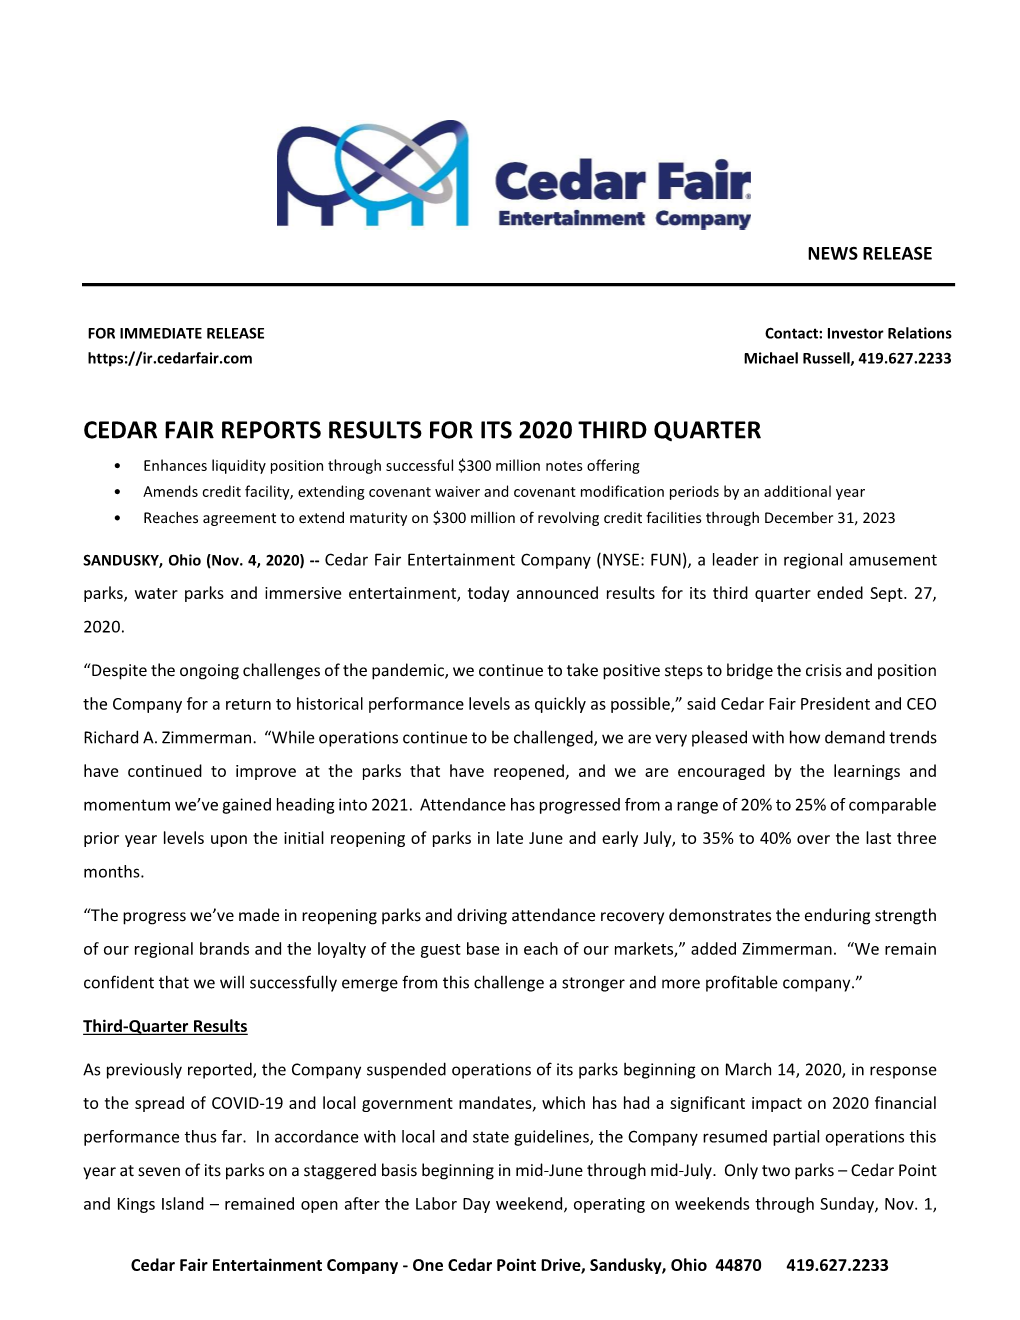 Cedar Fair Reports Results for Its 2020 Third Quarter